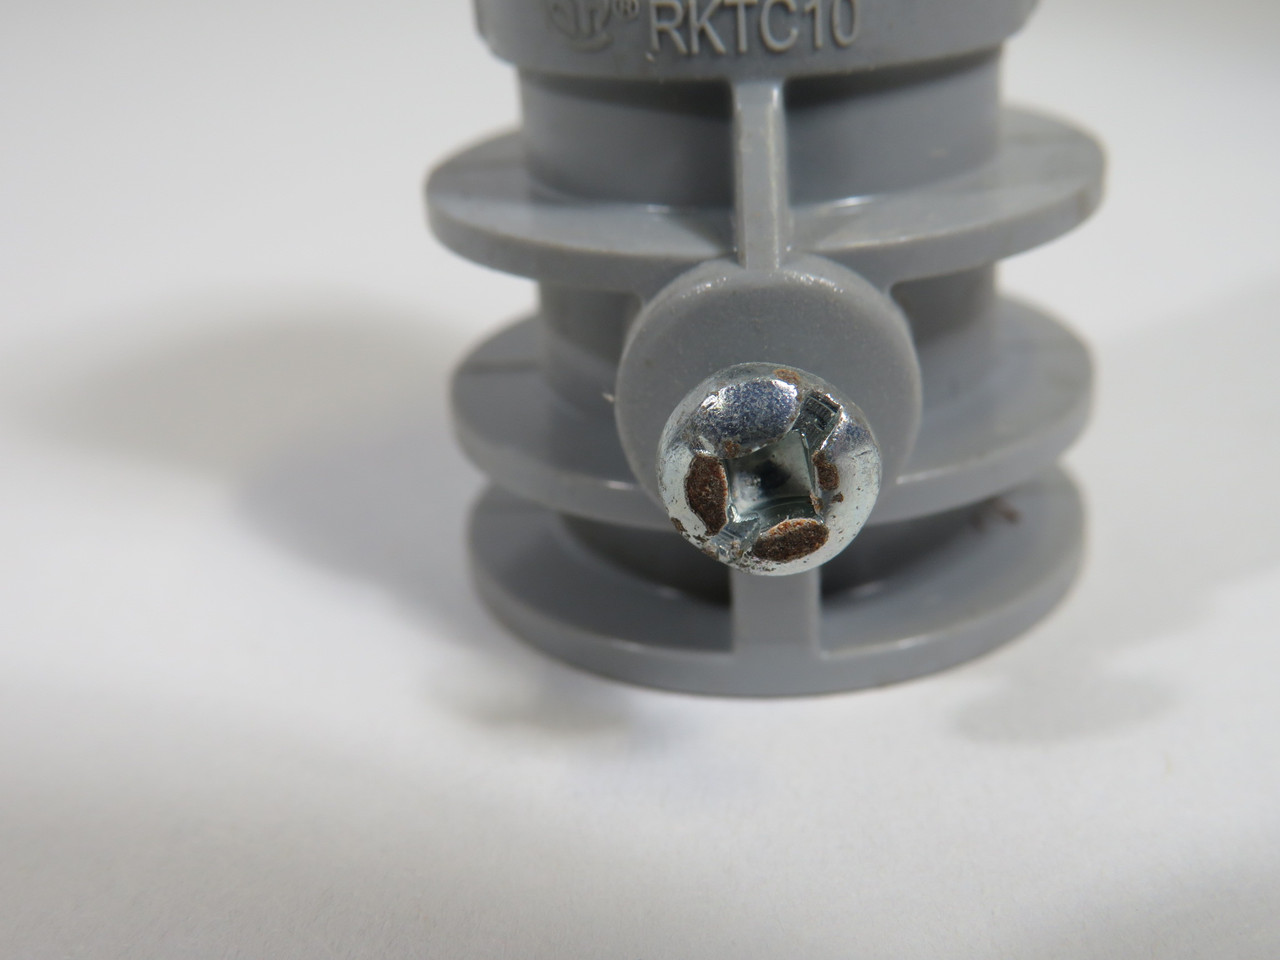 Royal RKTC10 ENT to EMT Set Screw Adapter 1/2" Box of 62 SHELF WEAR ! NEW !